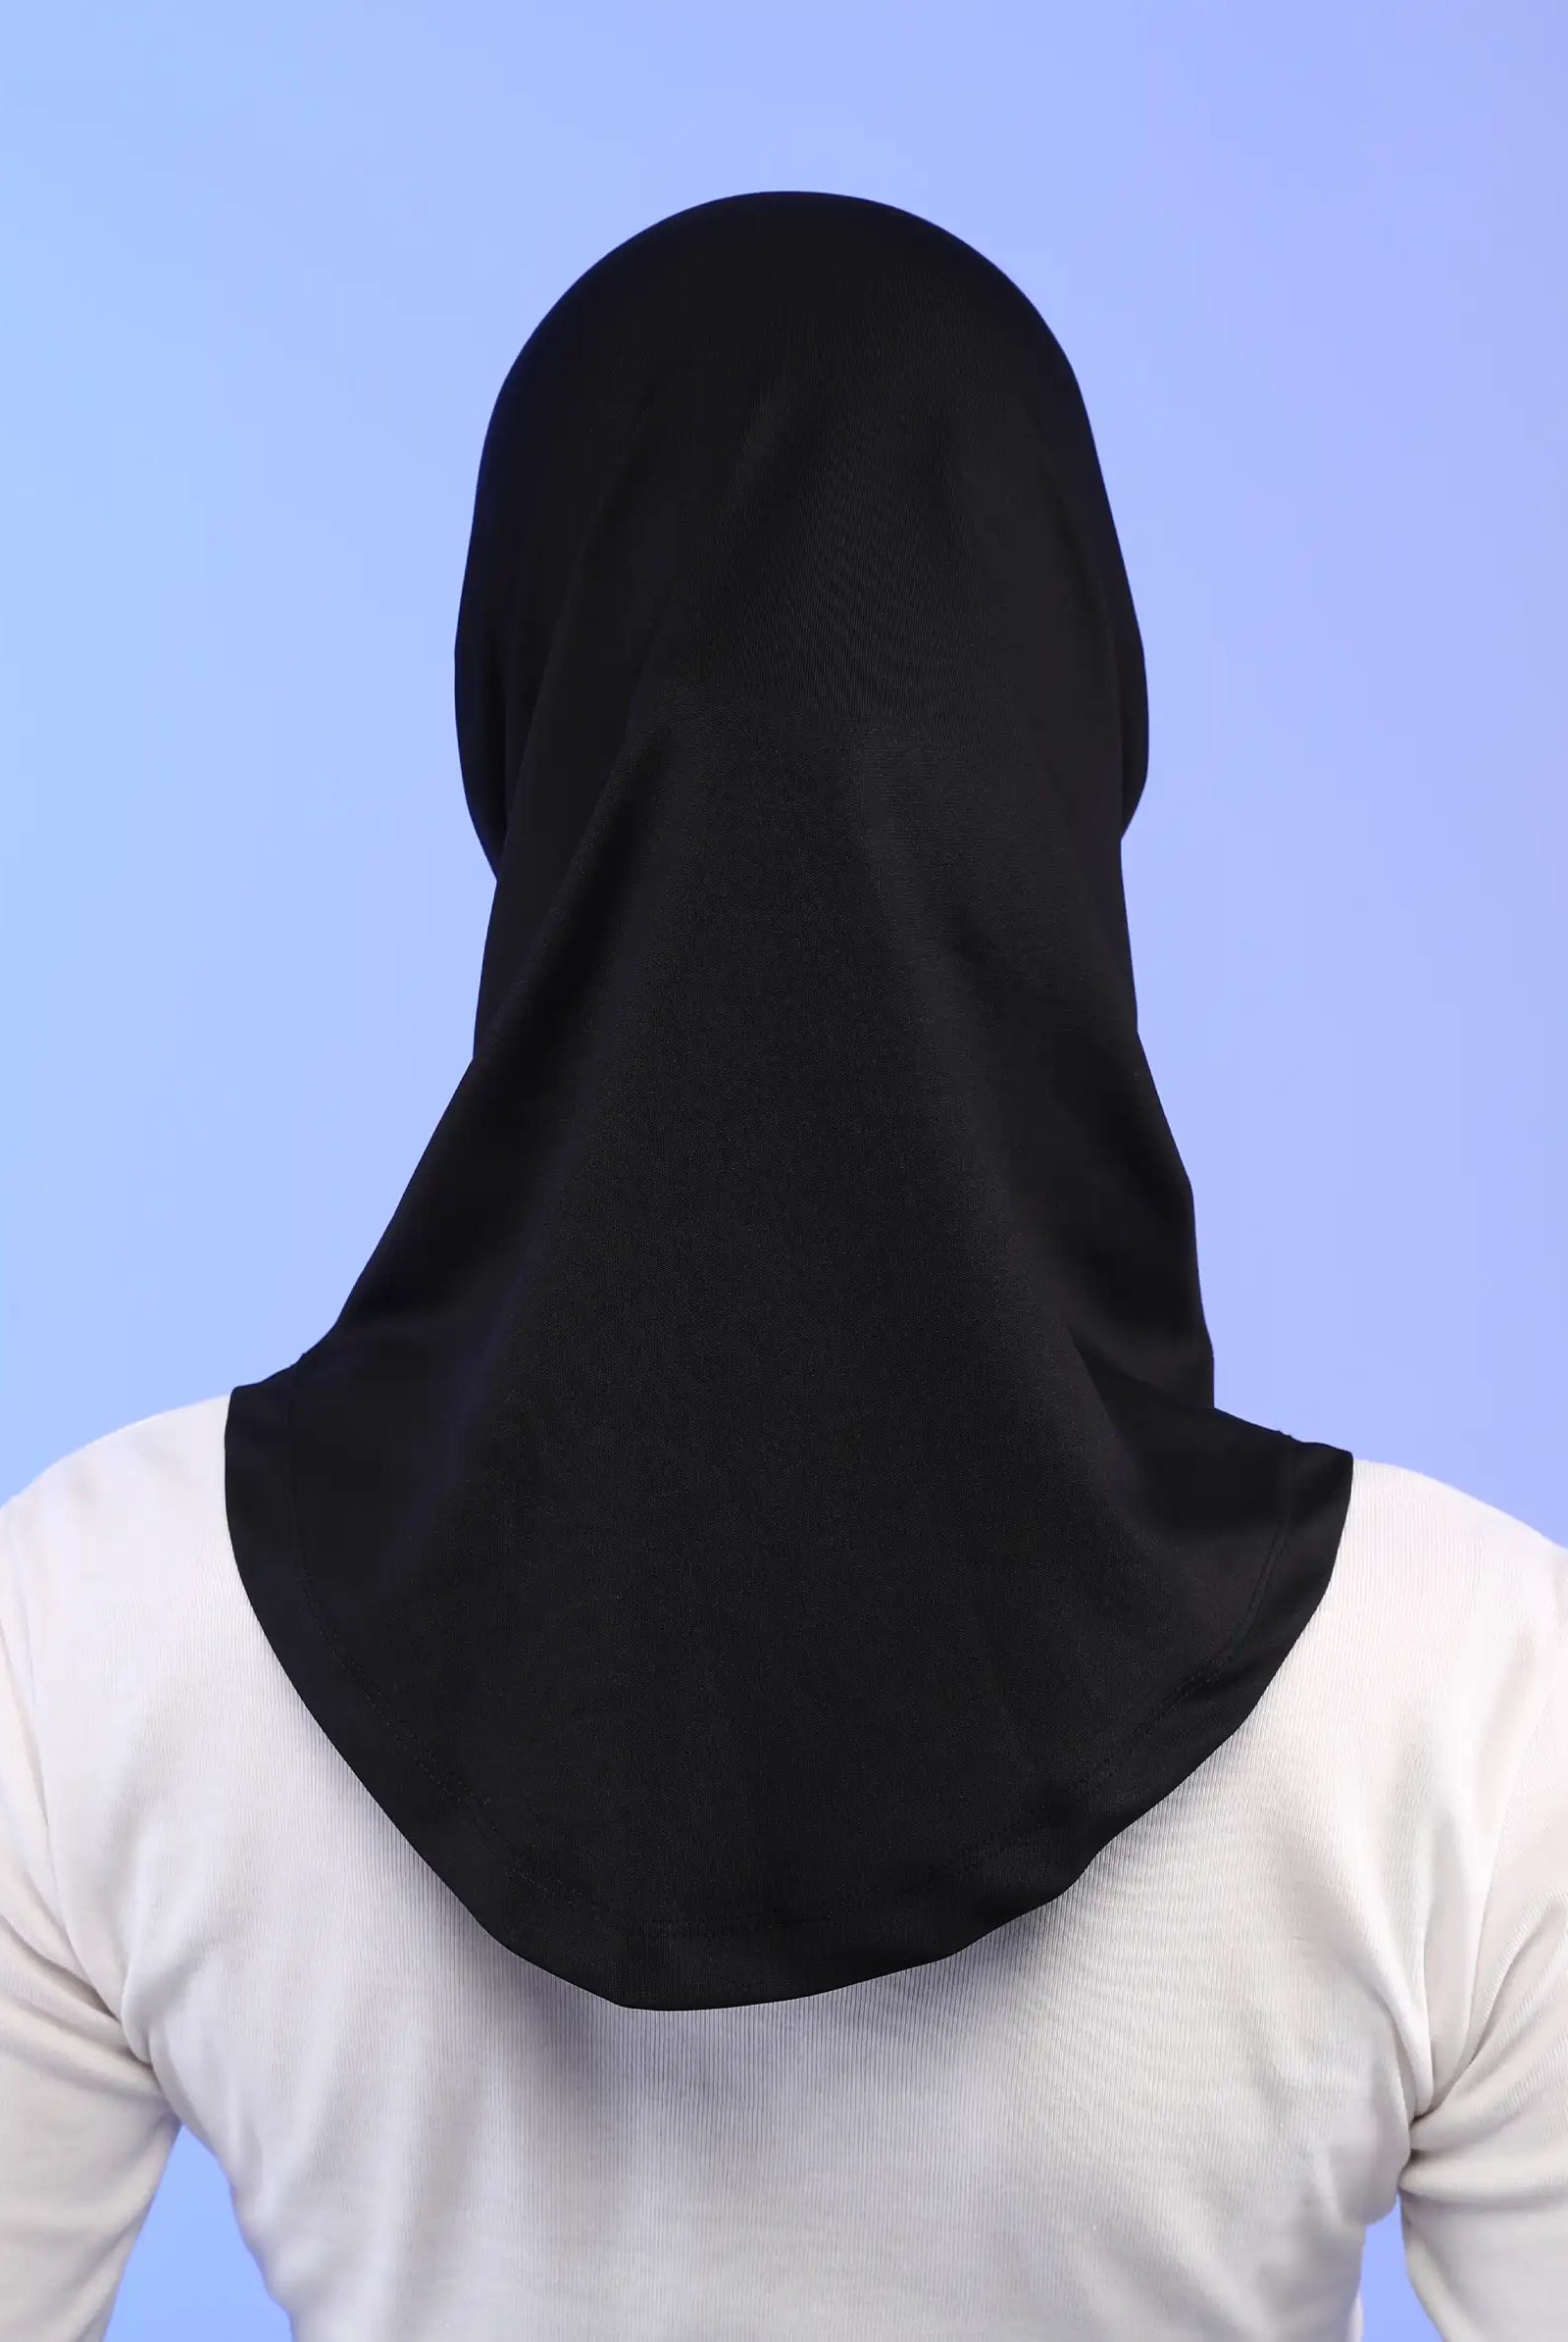 Black sport hijab for women